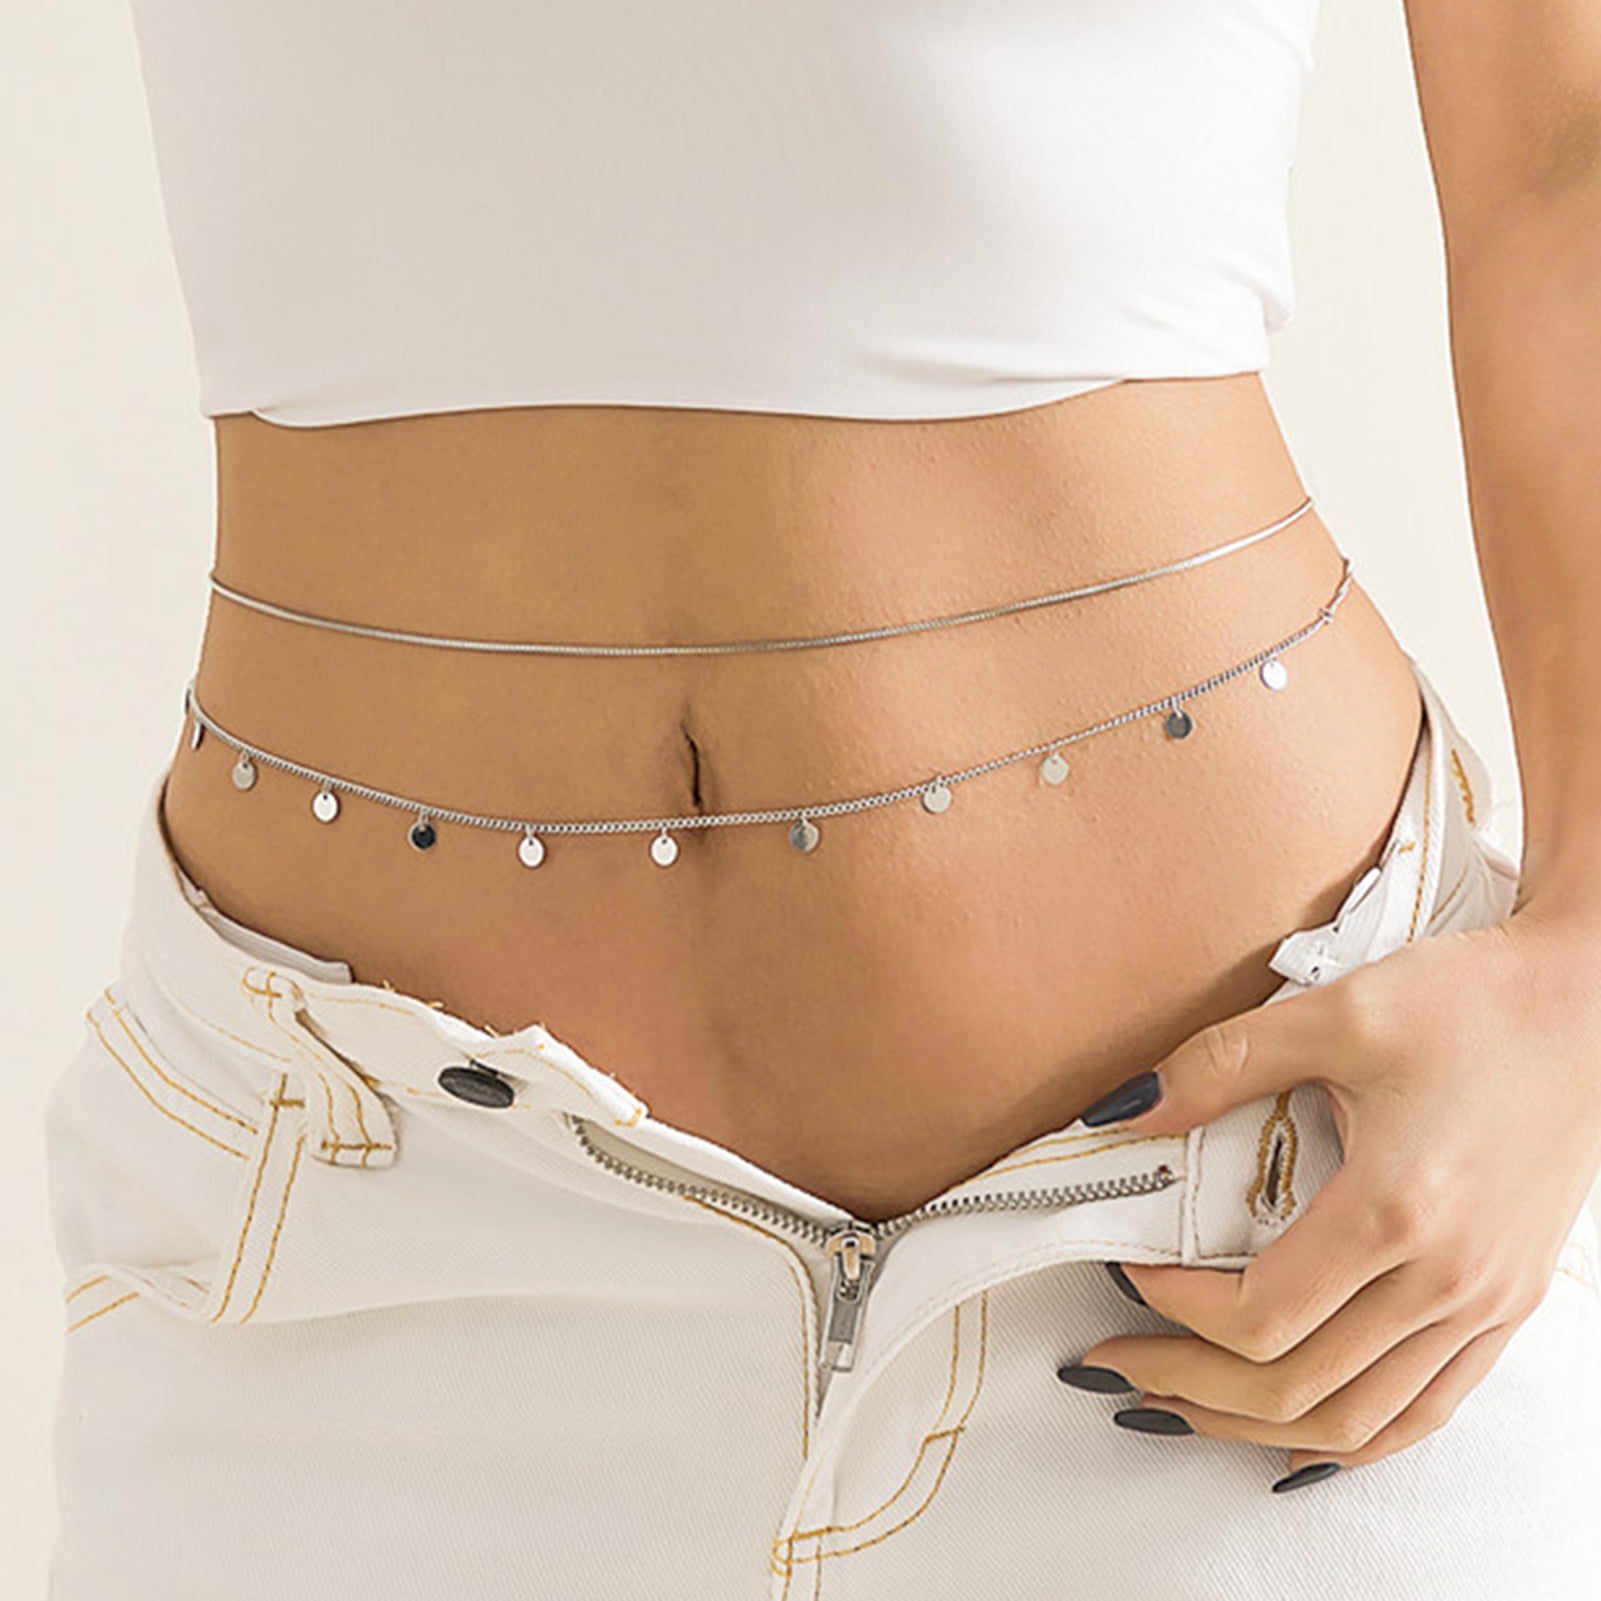 Kaufe Jewelry multi-layer cross pendant waist chain pants metal accessories  sweet cool spicy girl